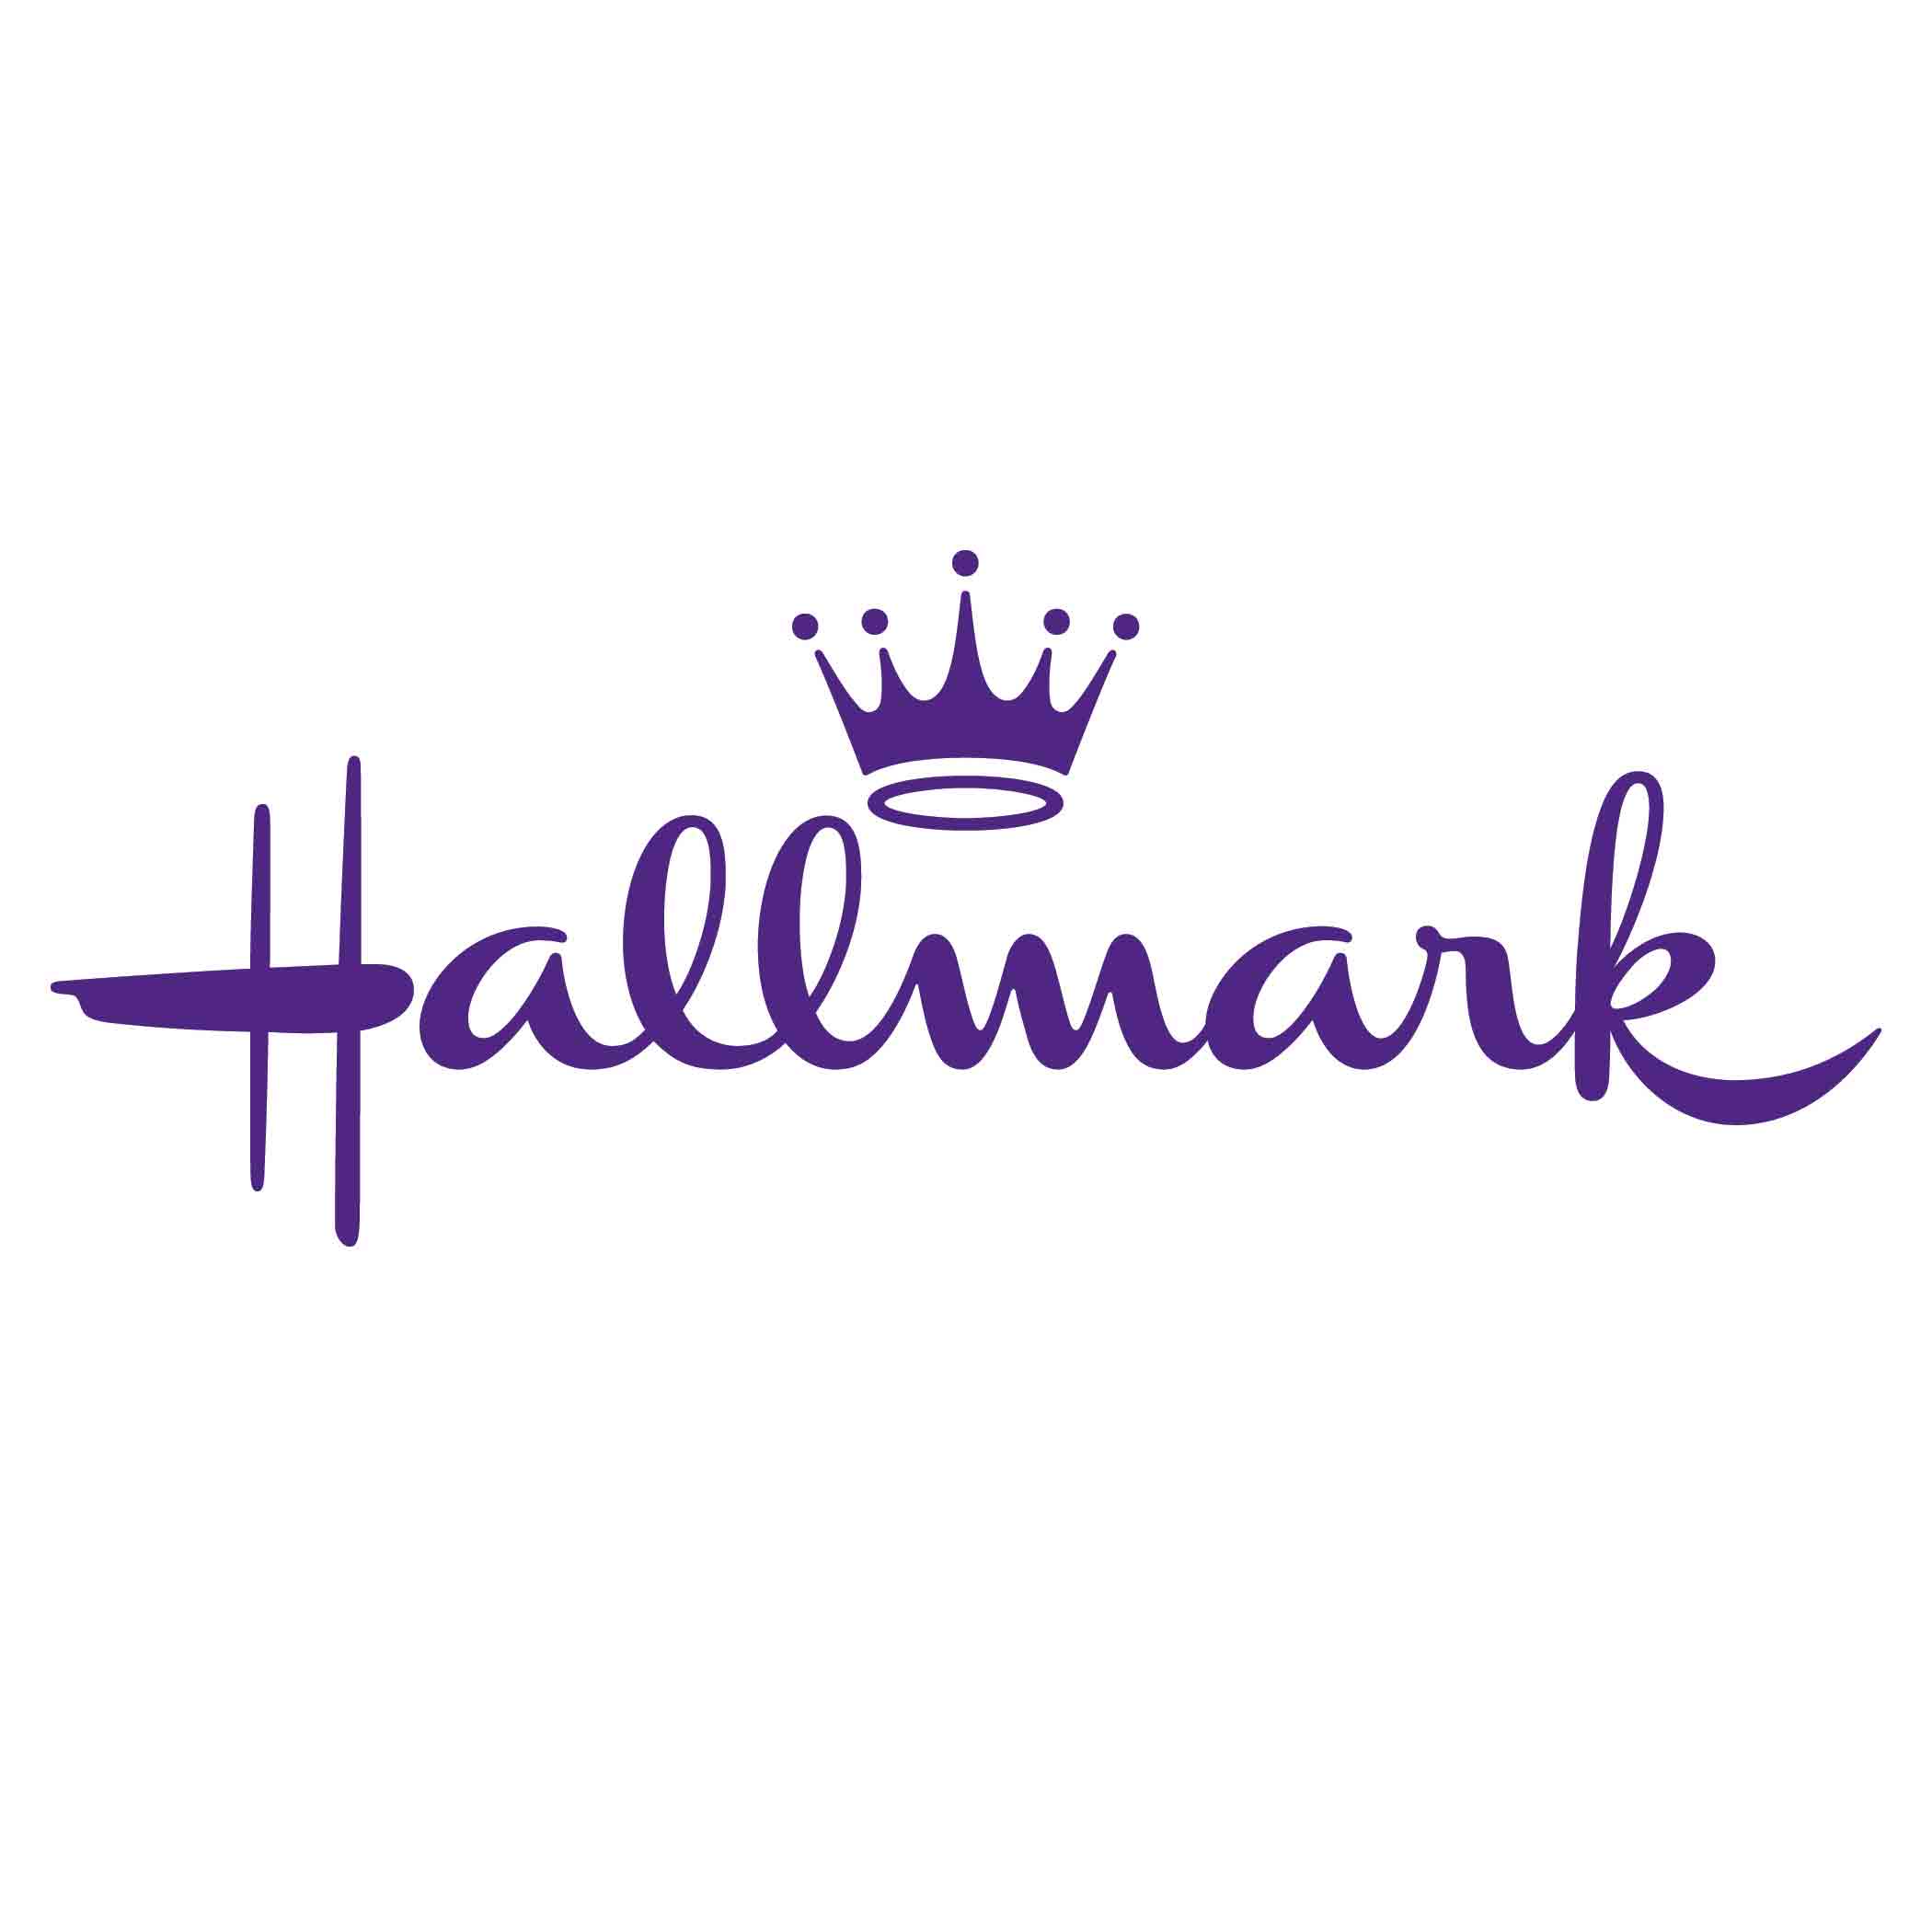 Halmmark Logo - Hallmark Named Greeting Card Brand of the Year in 2019 Harris Poll